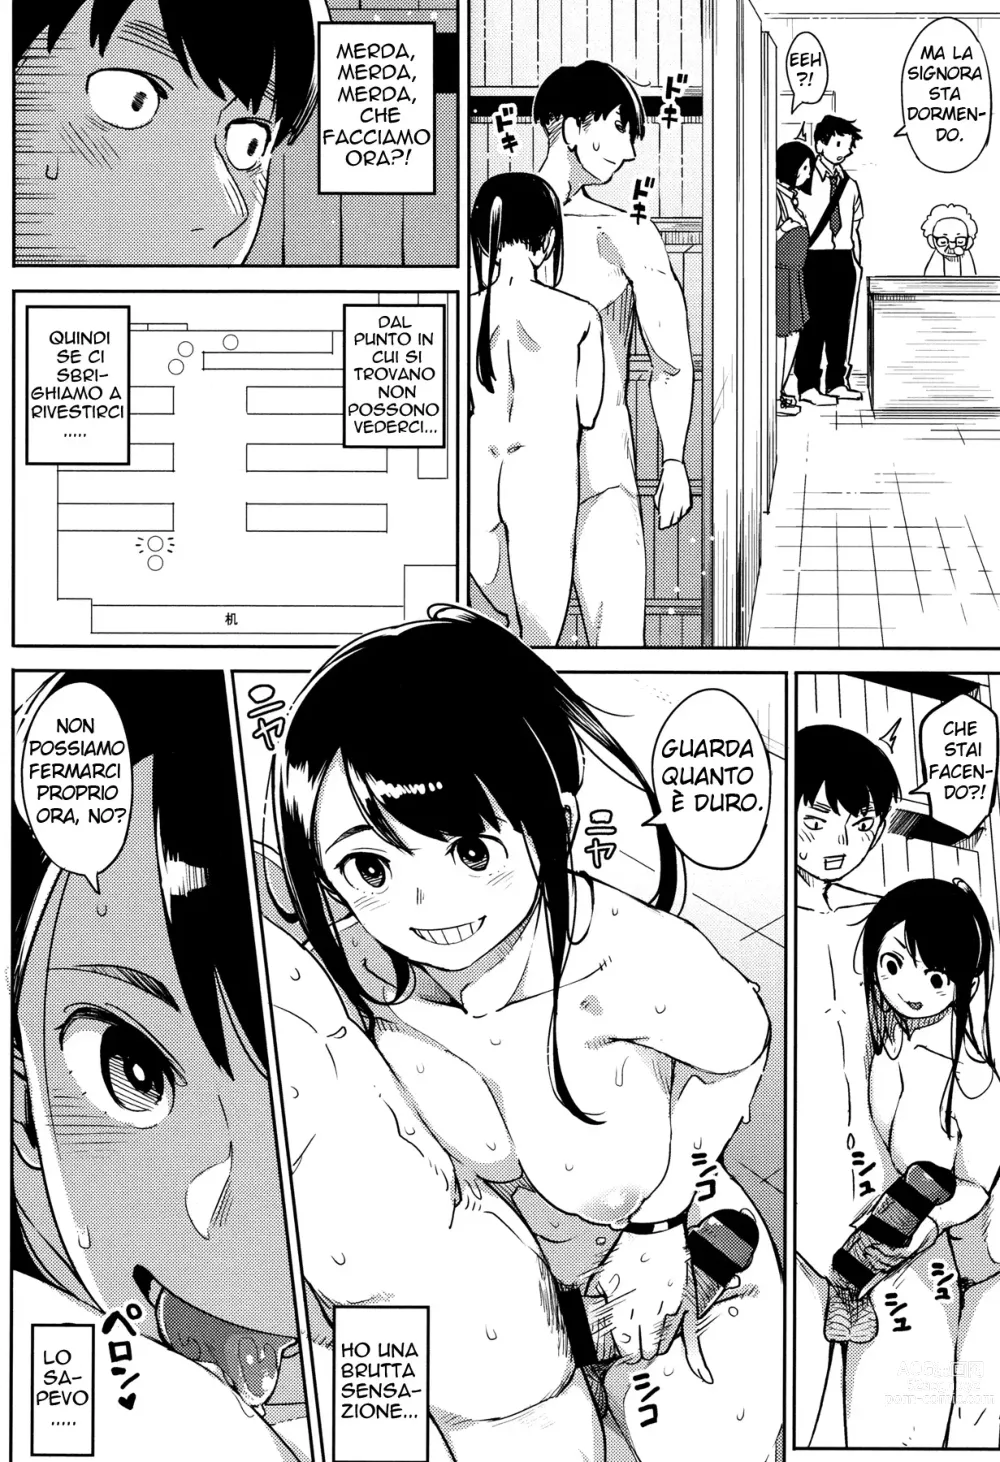 Page 16 of manga Invader